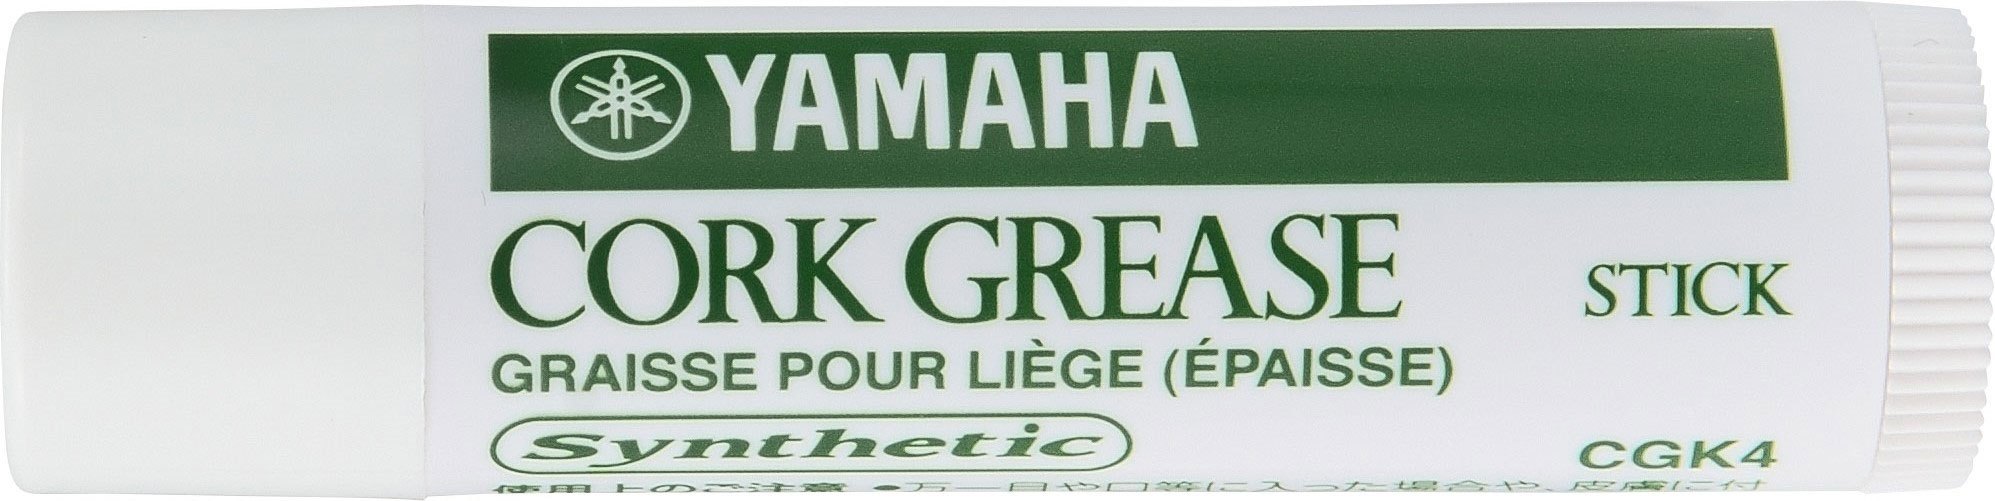 Yamaha Synthetic Cork Grease, Stick